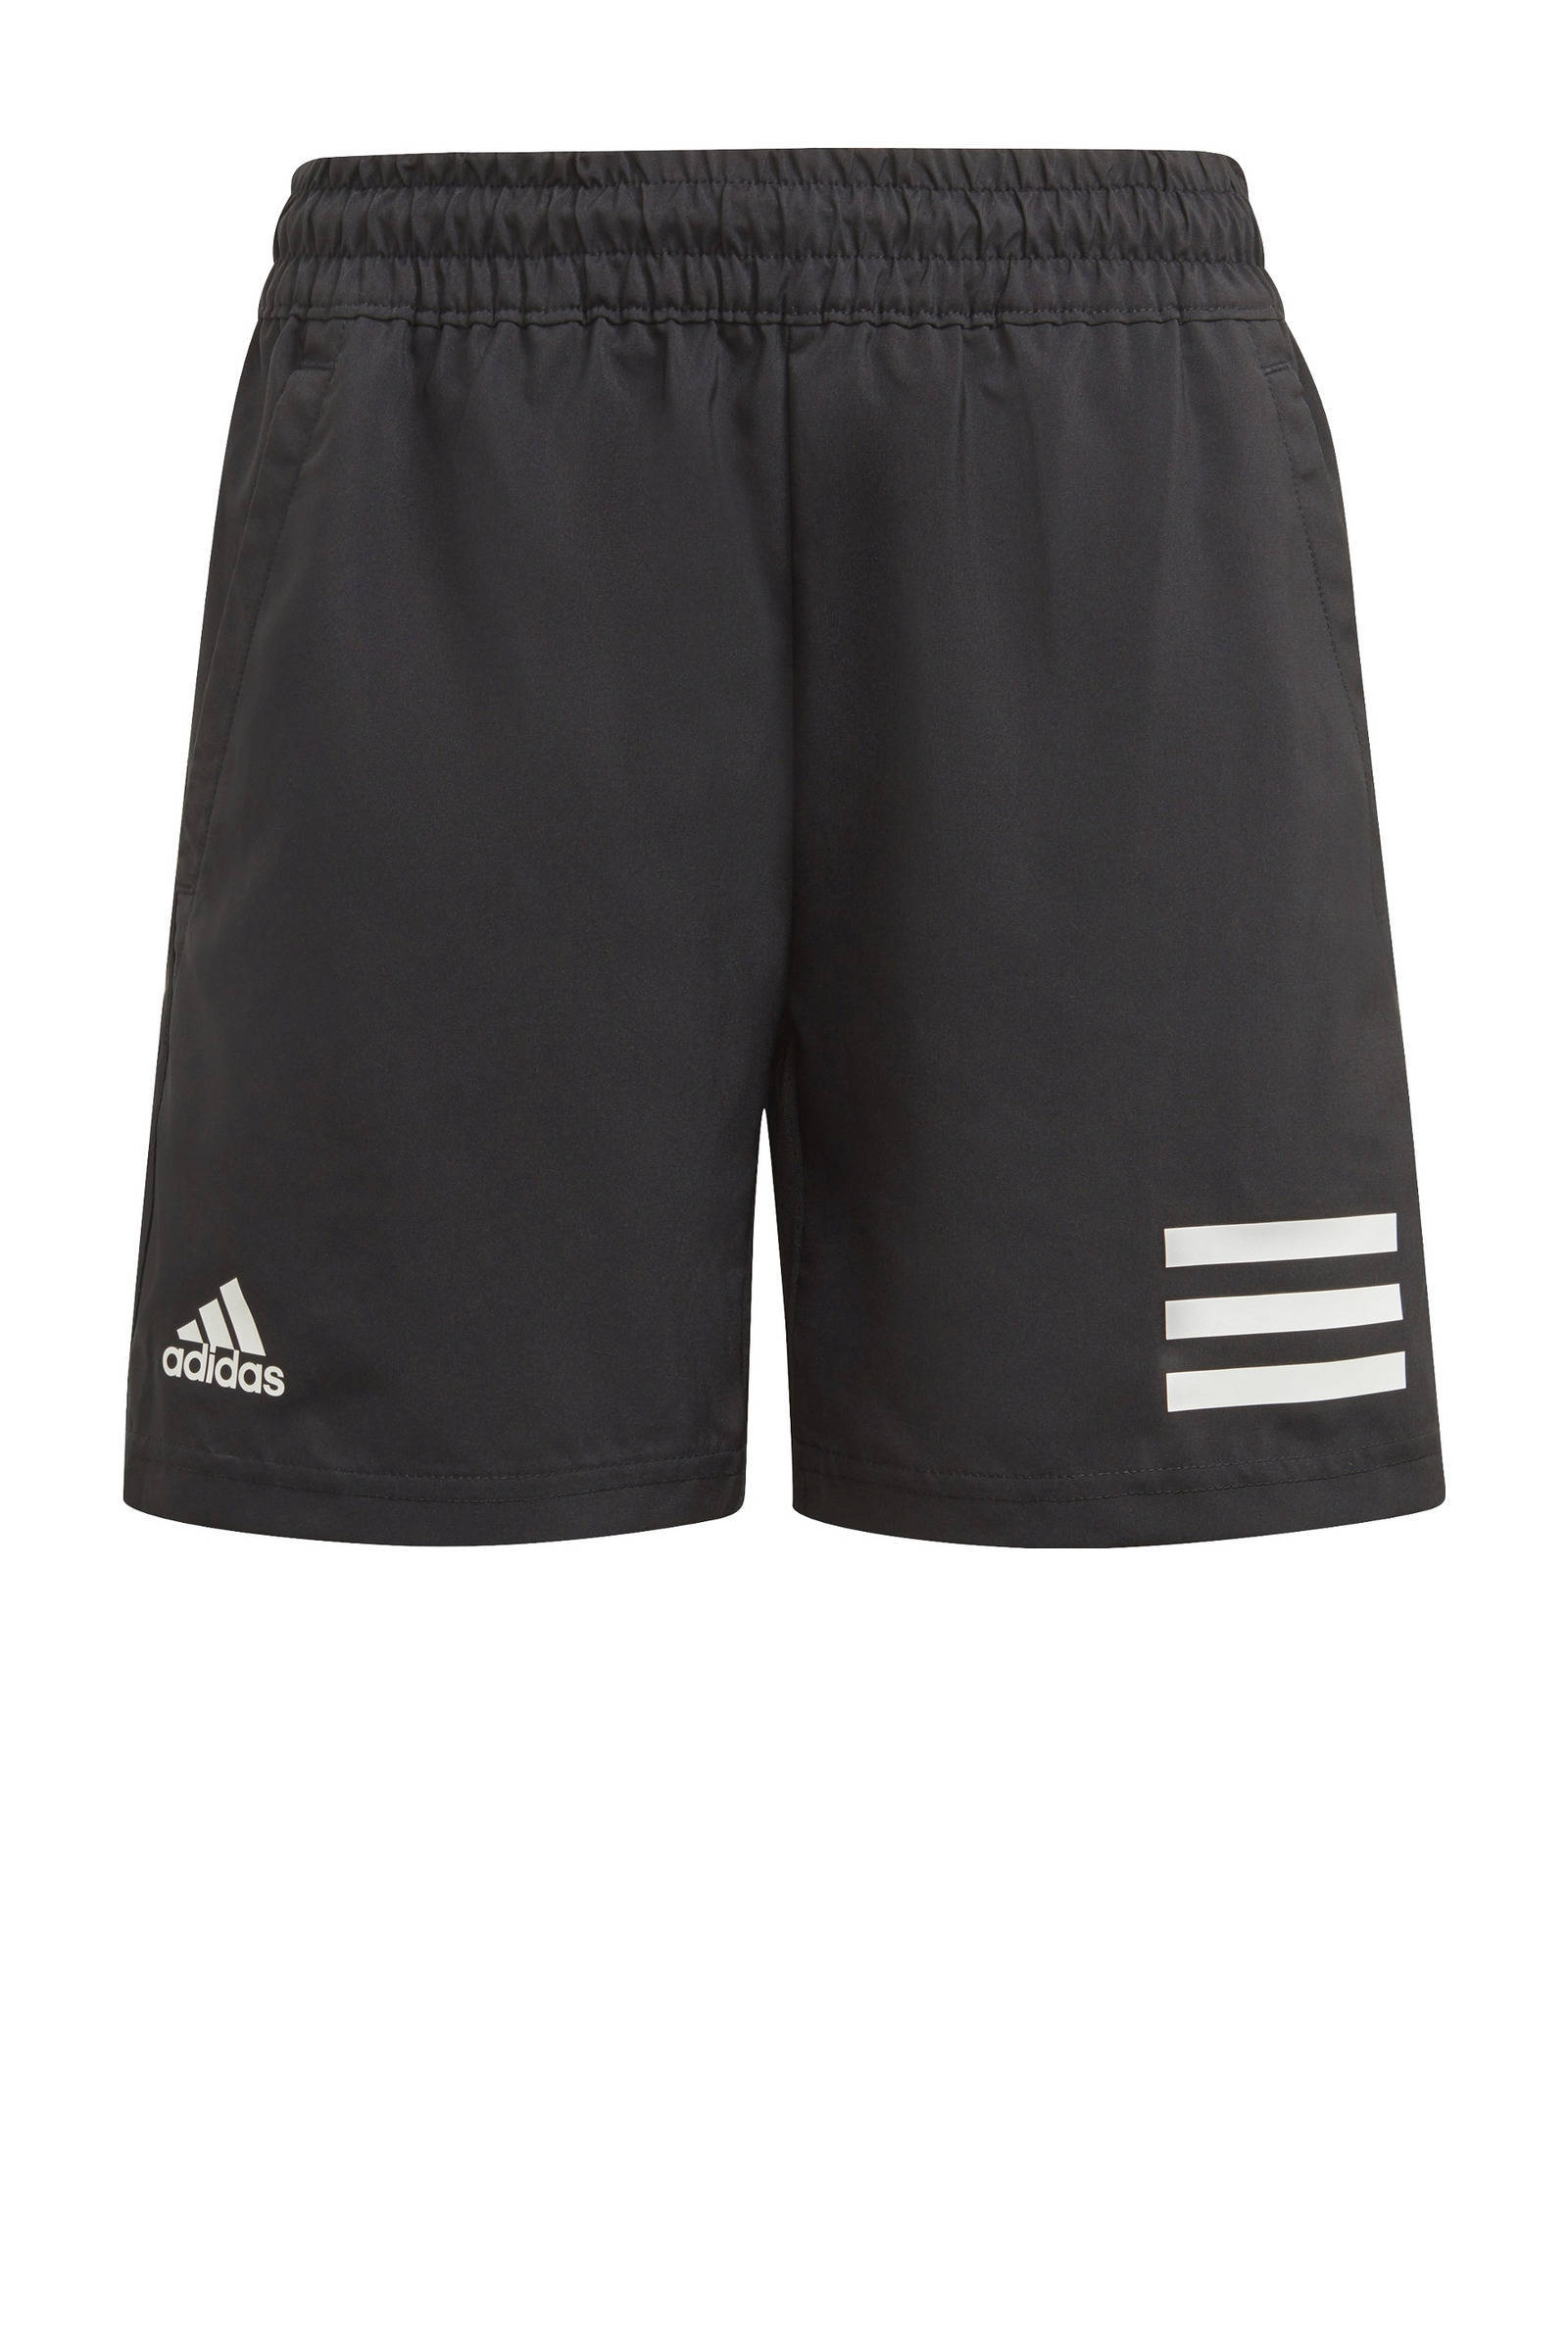 Adidas Performance tennisshort zwart/wit online kopen